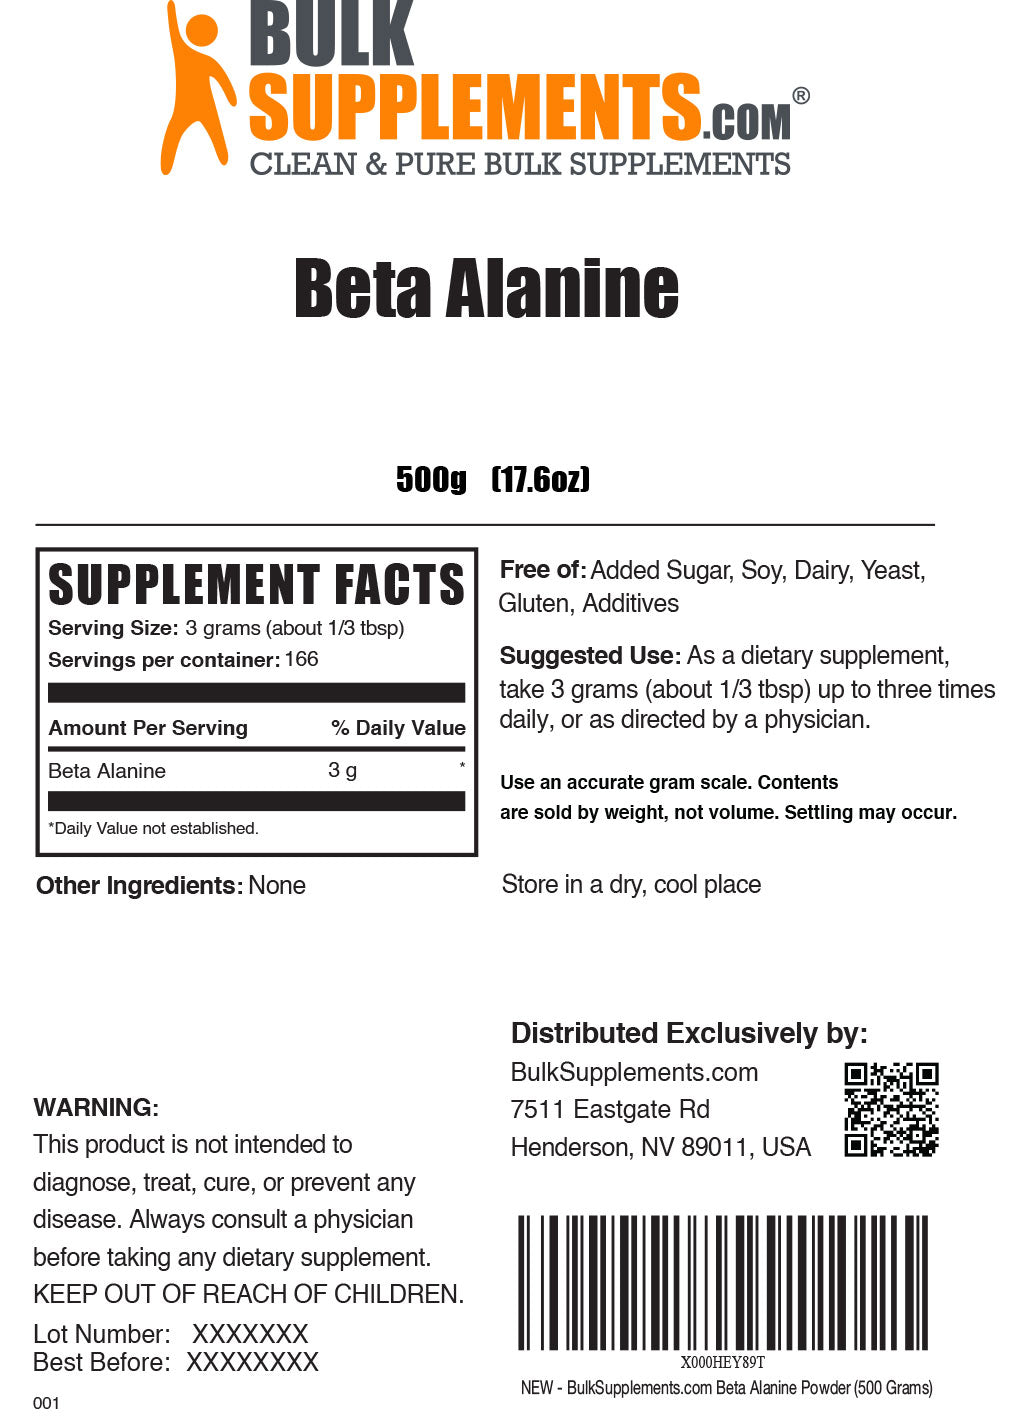 Beta alanine powder label 500g